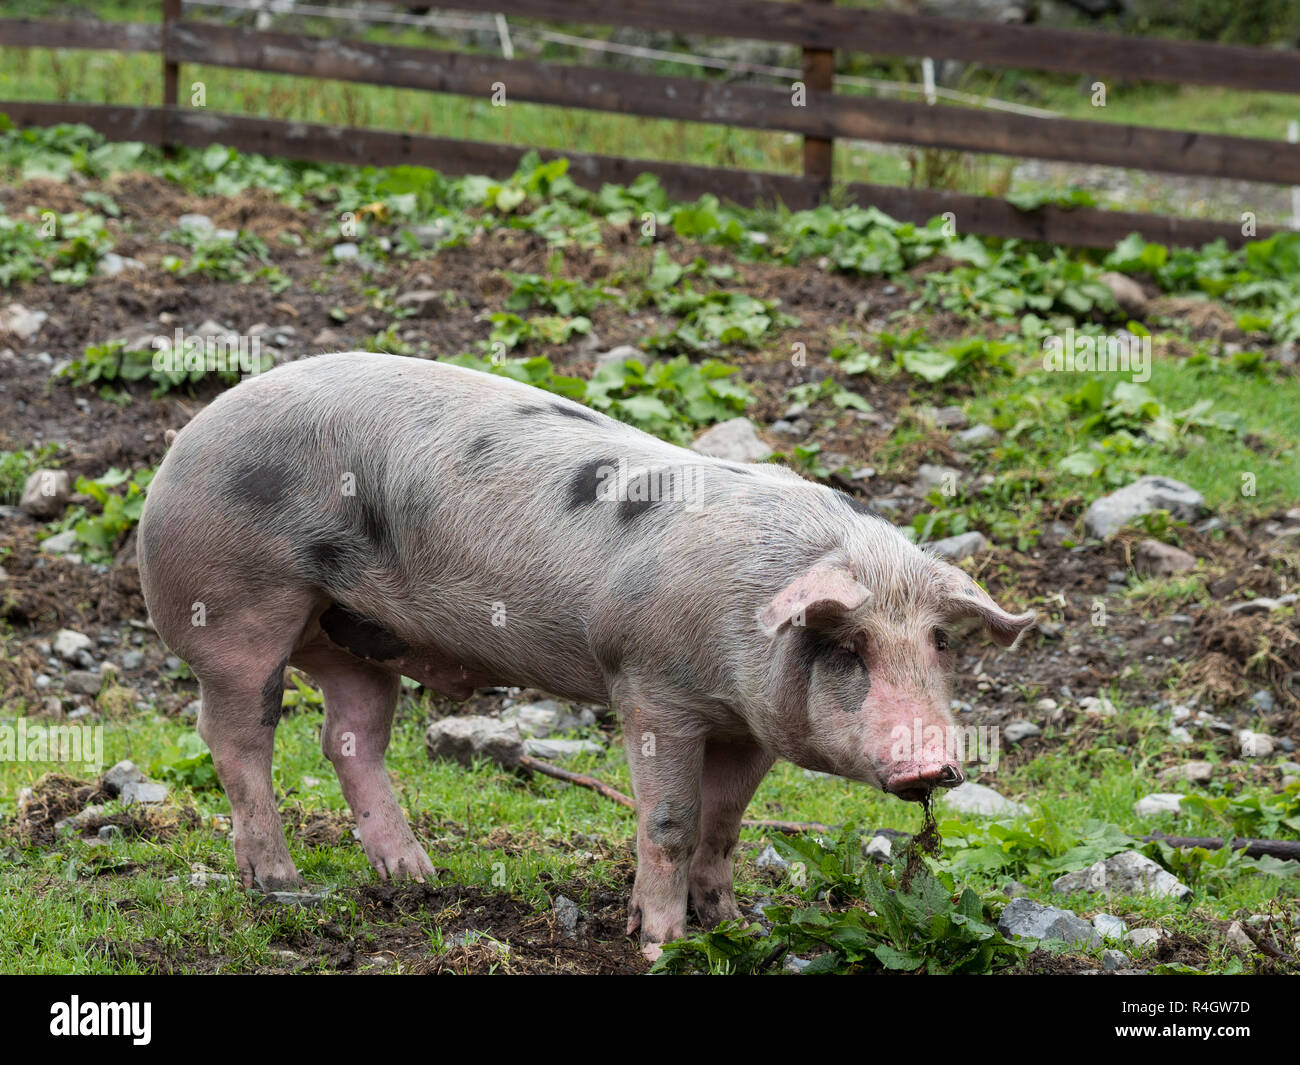 Pig in pasture Stock Photo